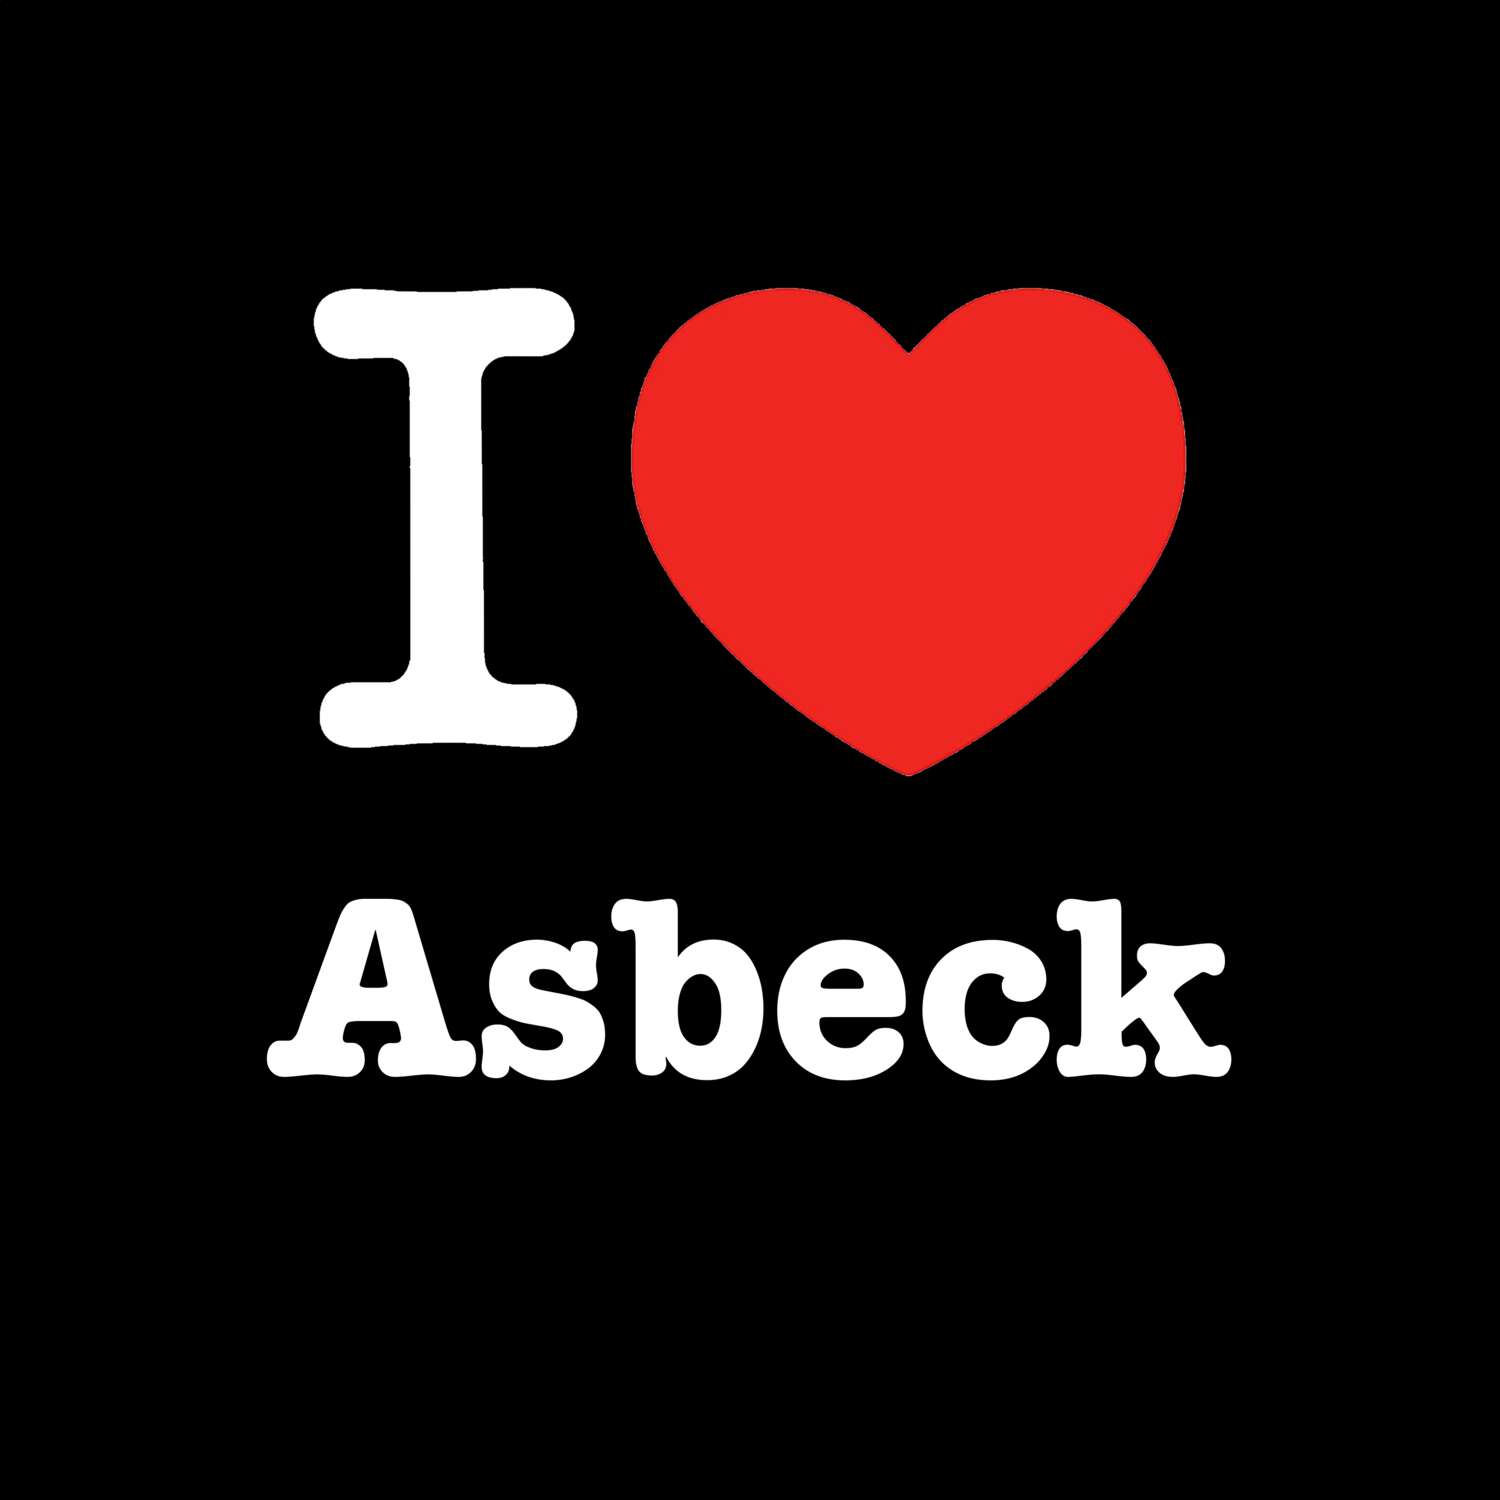 Asbeck T-Shirt »I love«